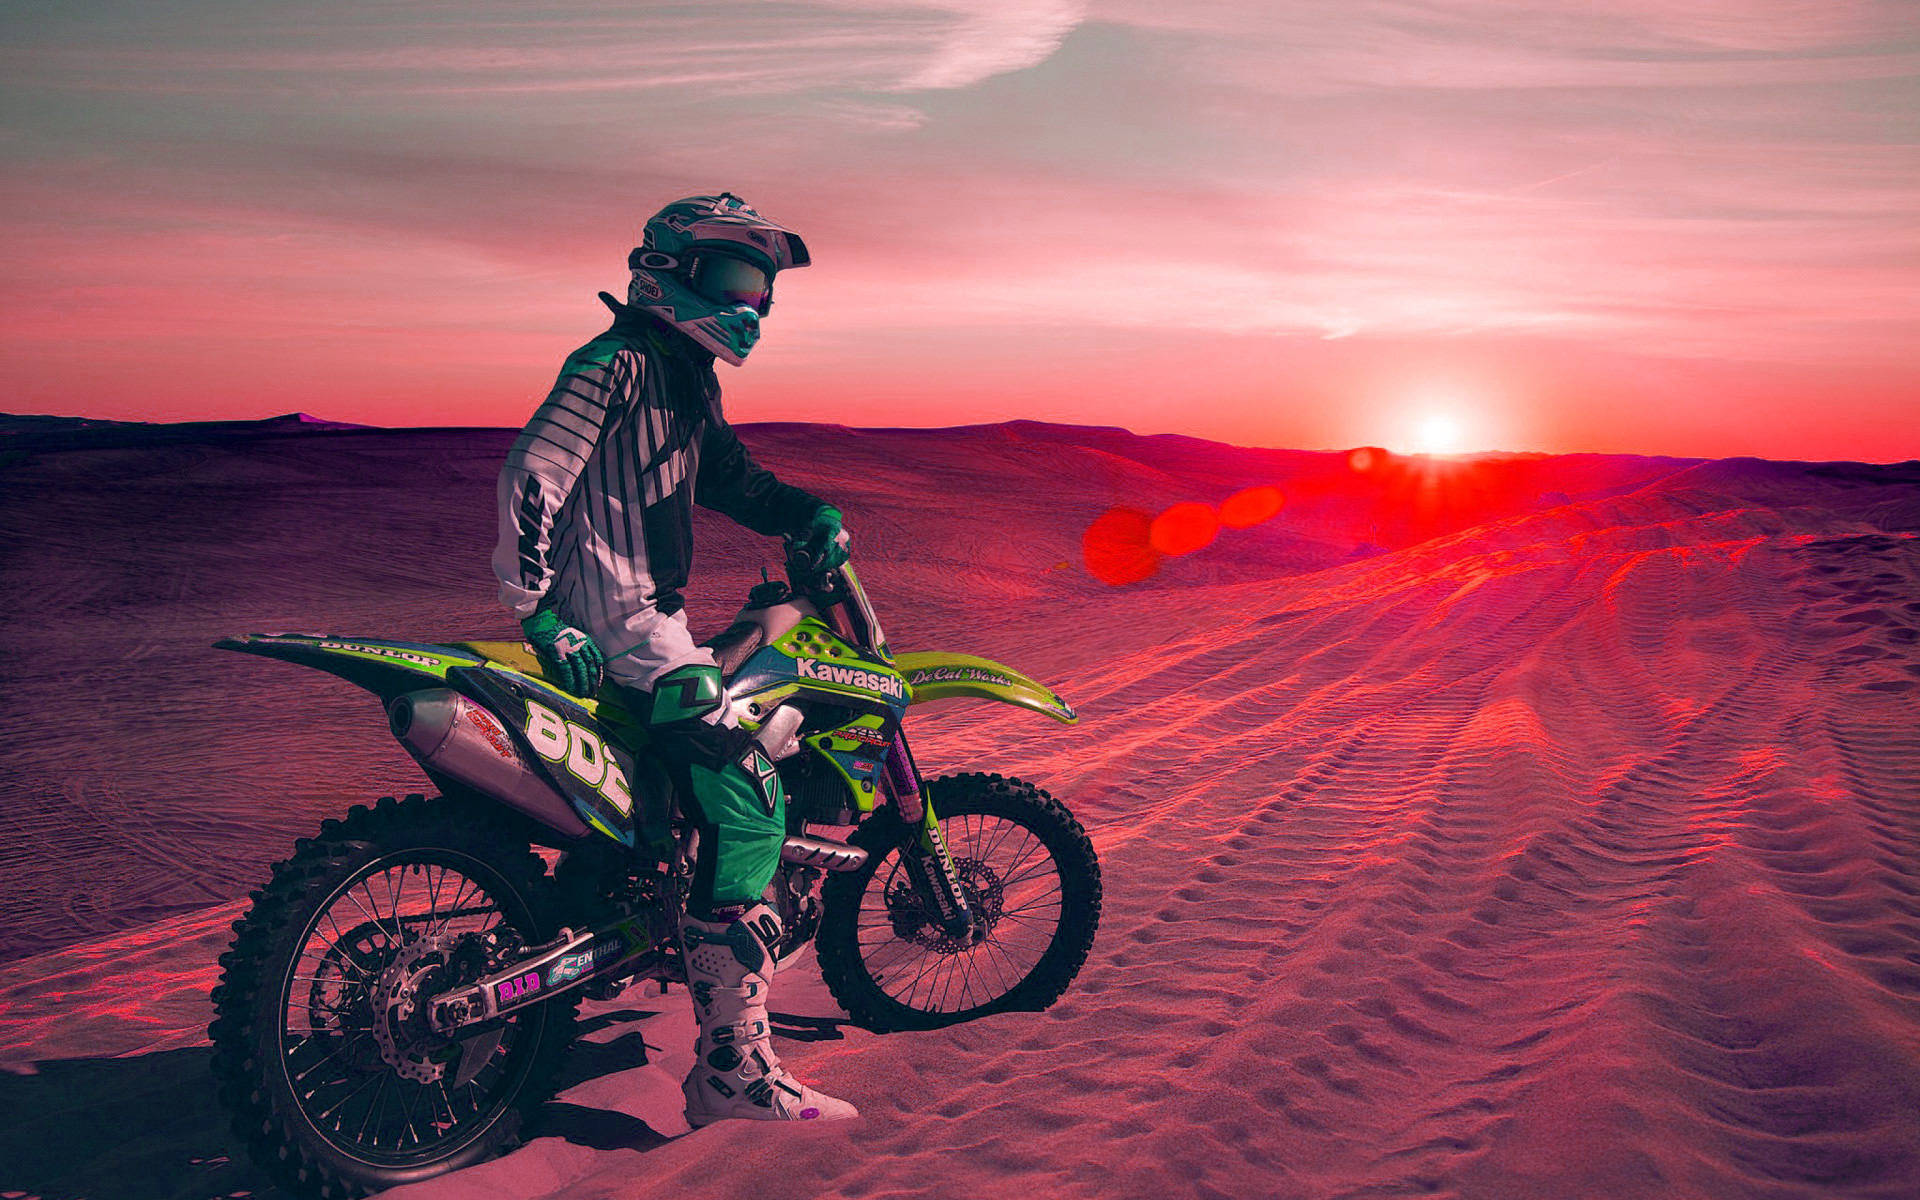 Cool Bike Rider On a Desert At Sunset Wallpaper